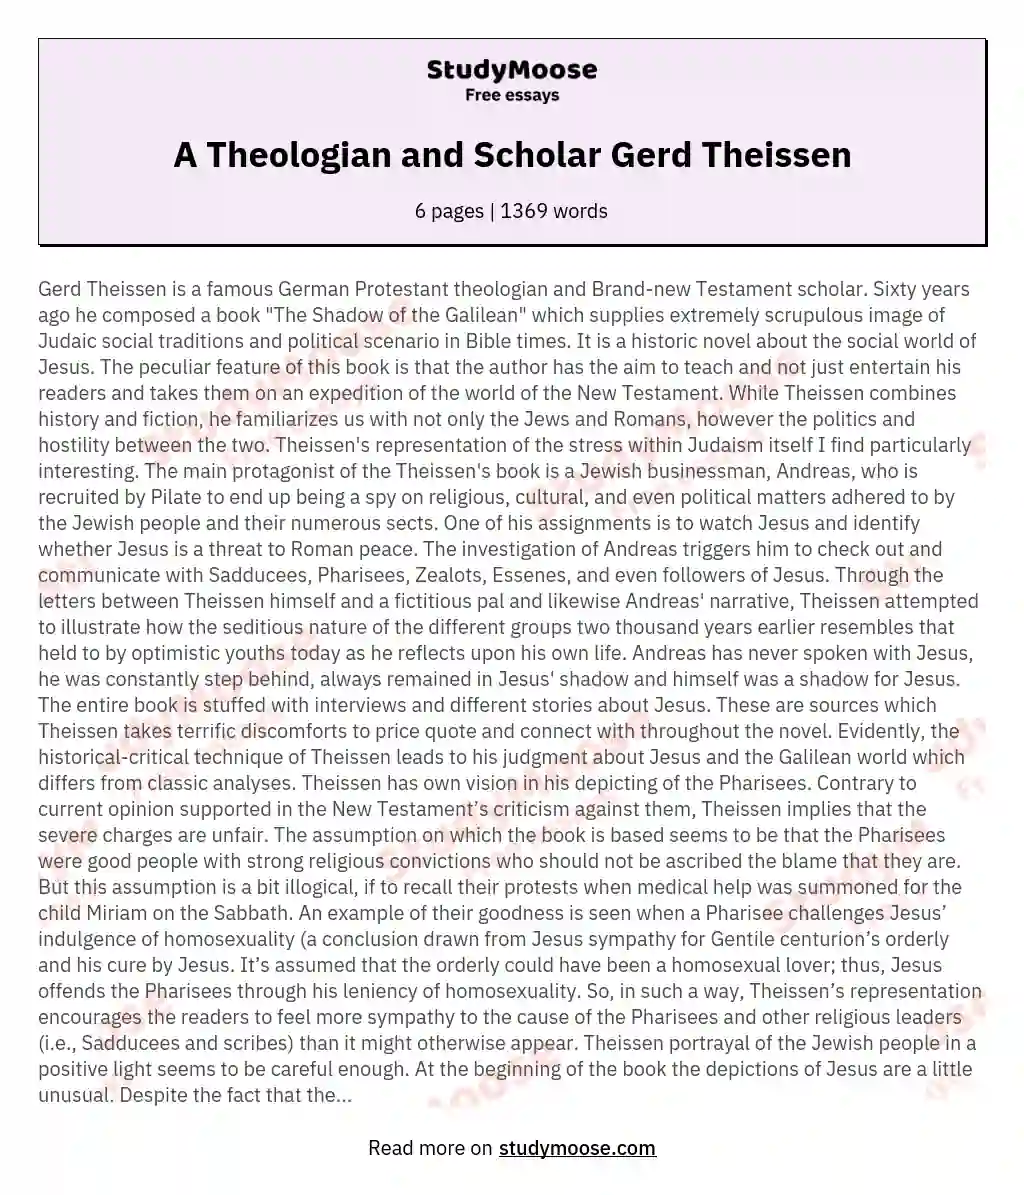 A Theologian and Scholar Gerd Theissen essay